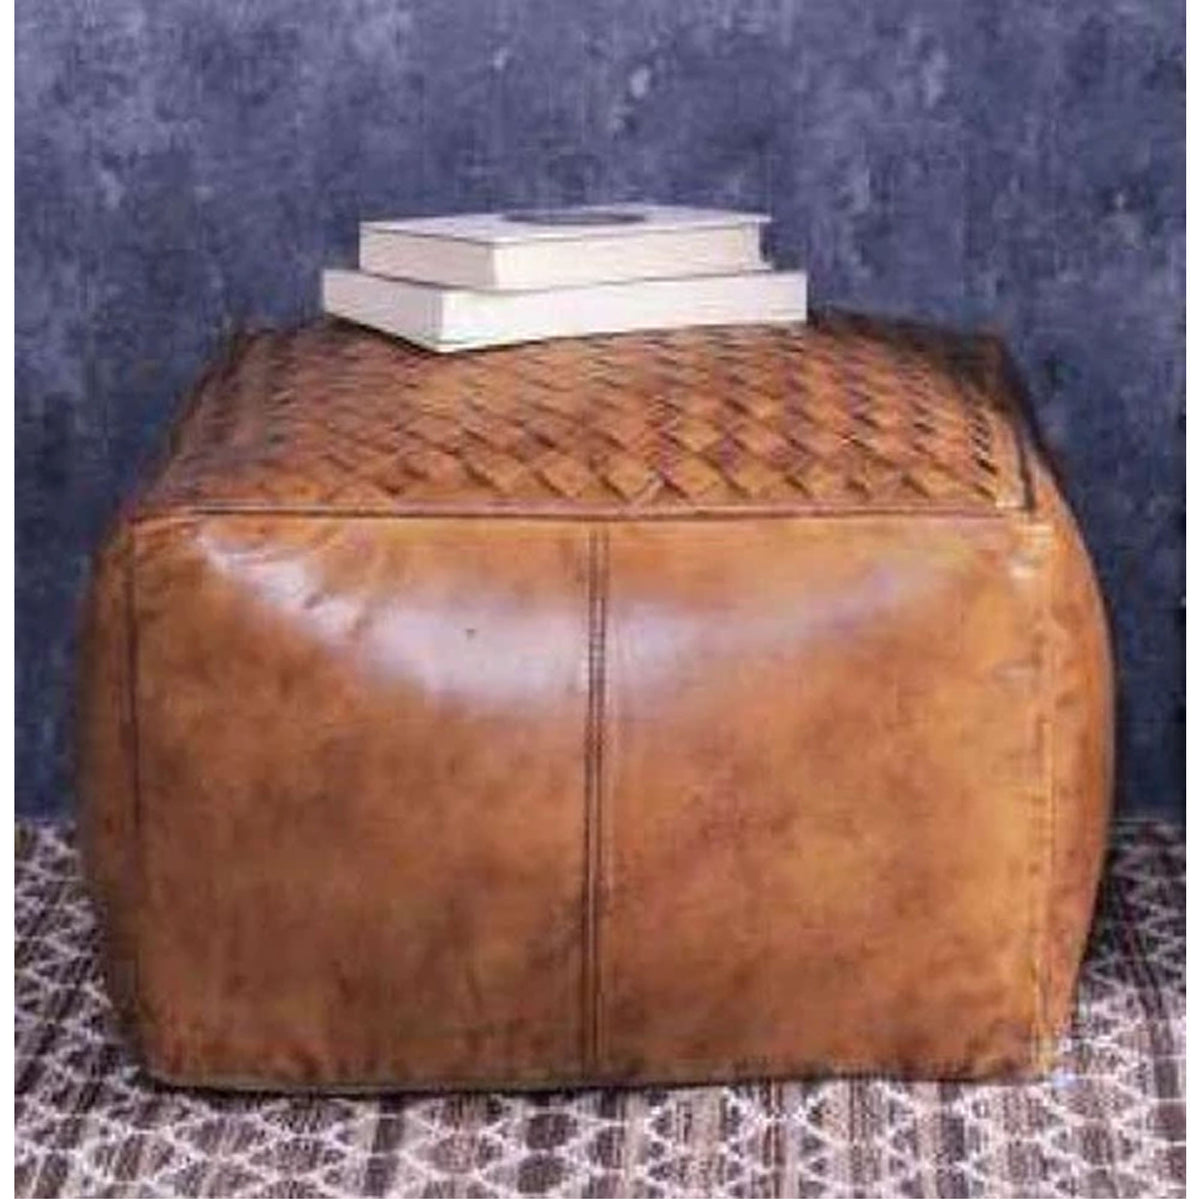 Square Latticed Leather Ottoman - Notbrand